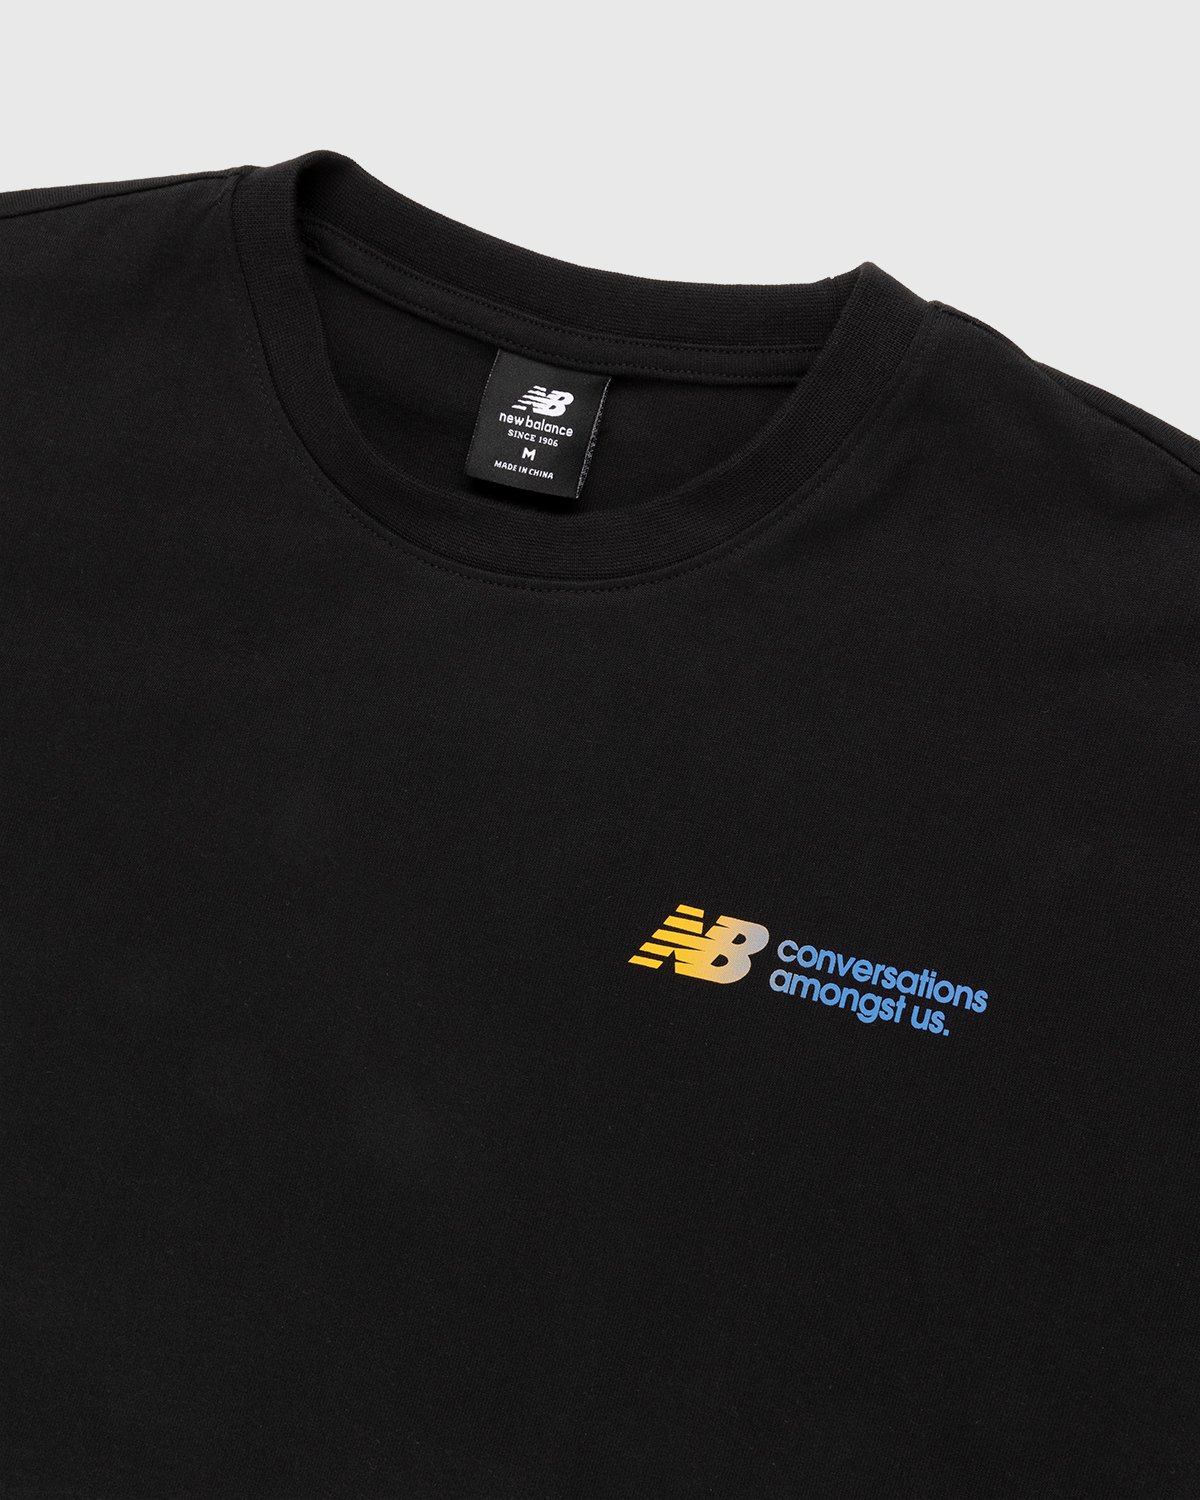 New Balance - Conversations Amongst Us Brand T-Shirt Black - Clothing - Black - Image 4